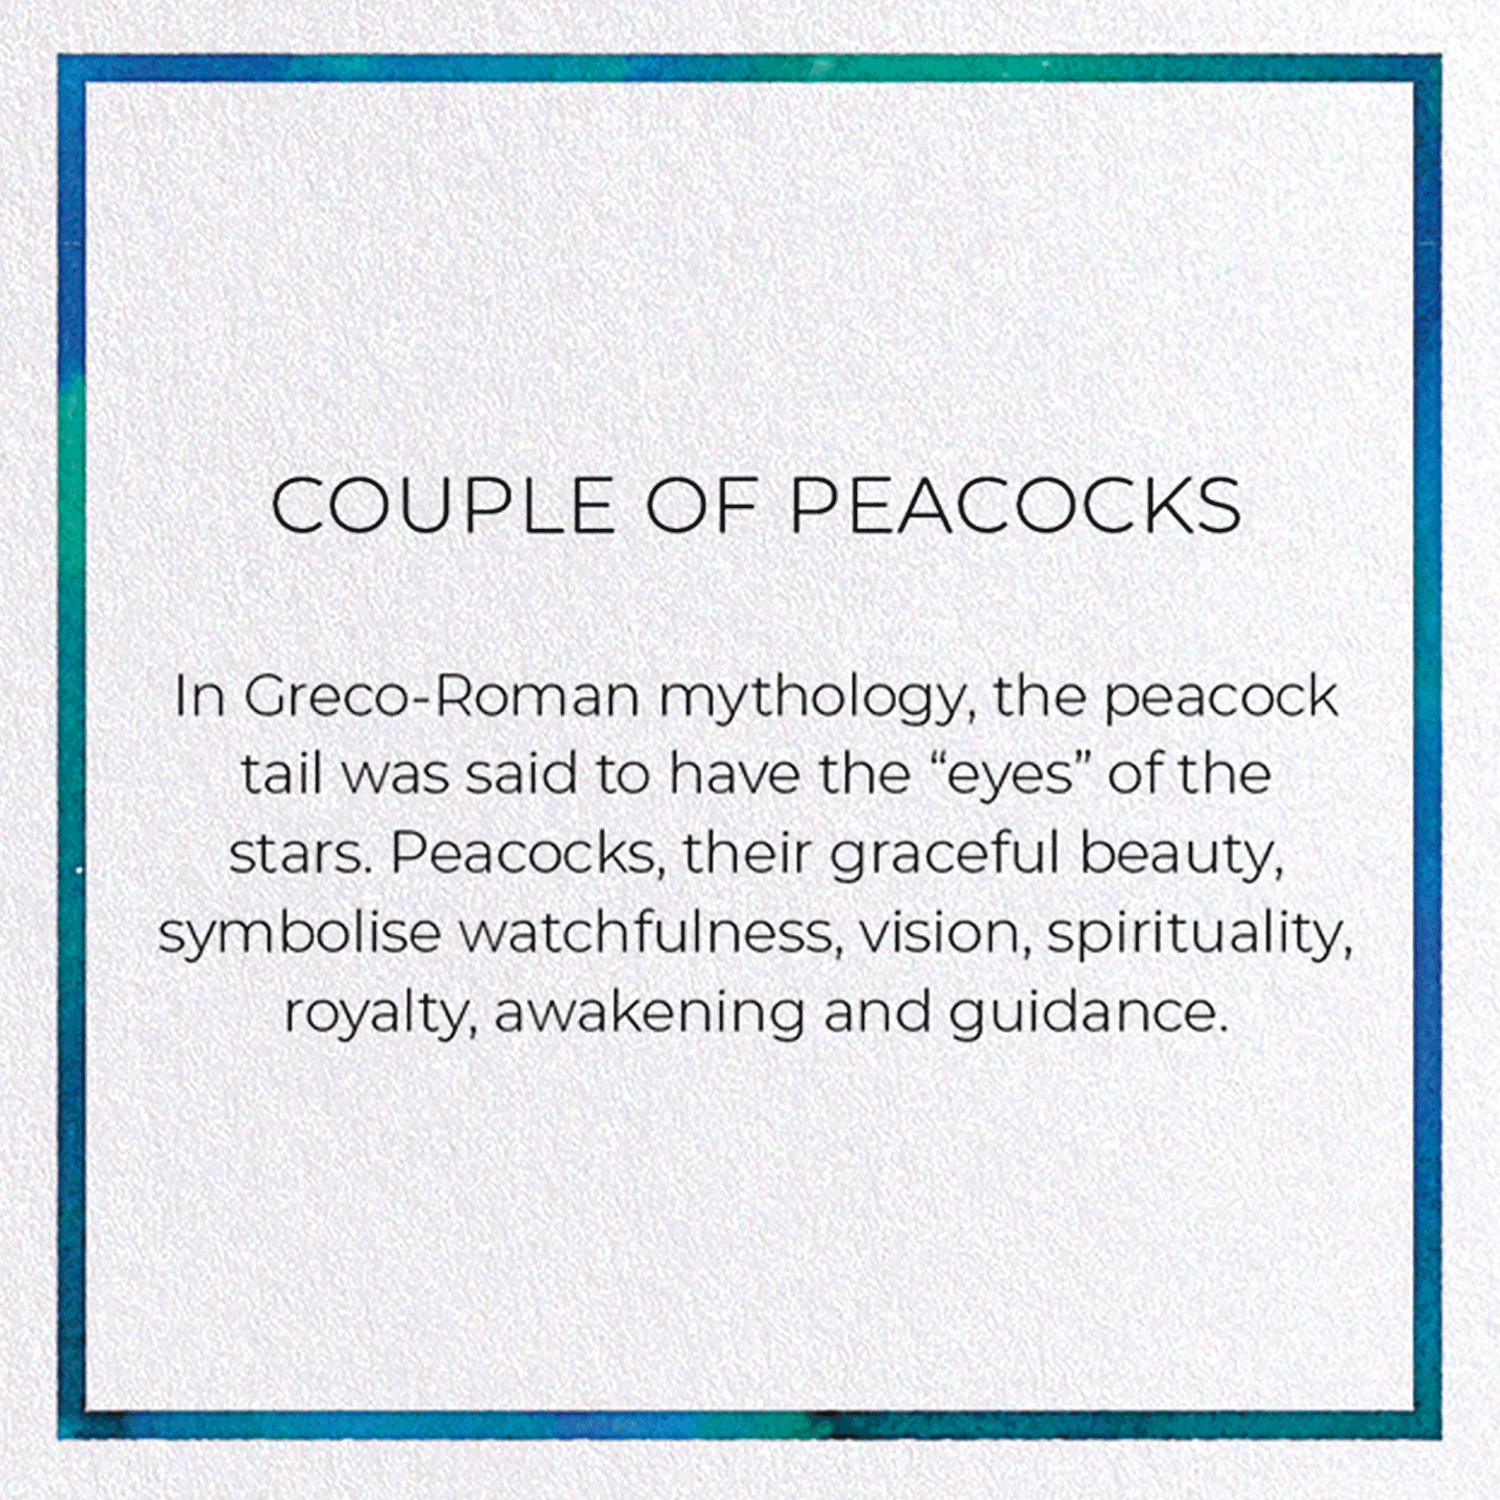 COUPLE OF PEACOCKS